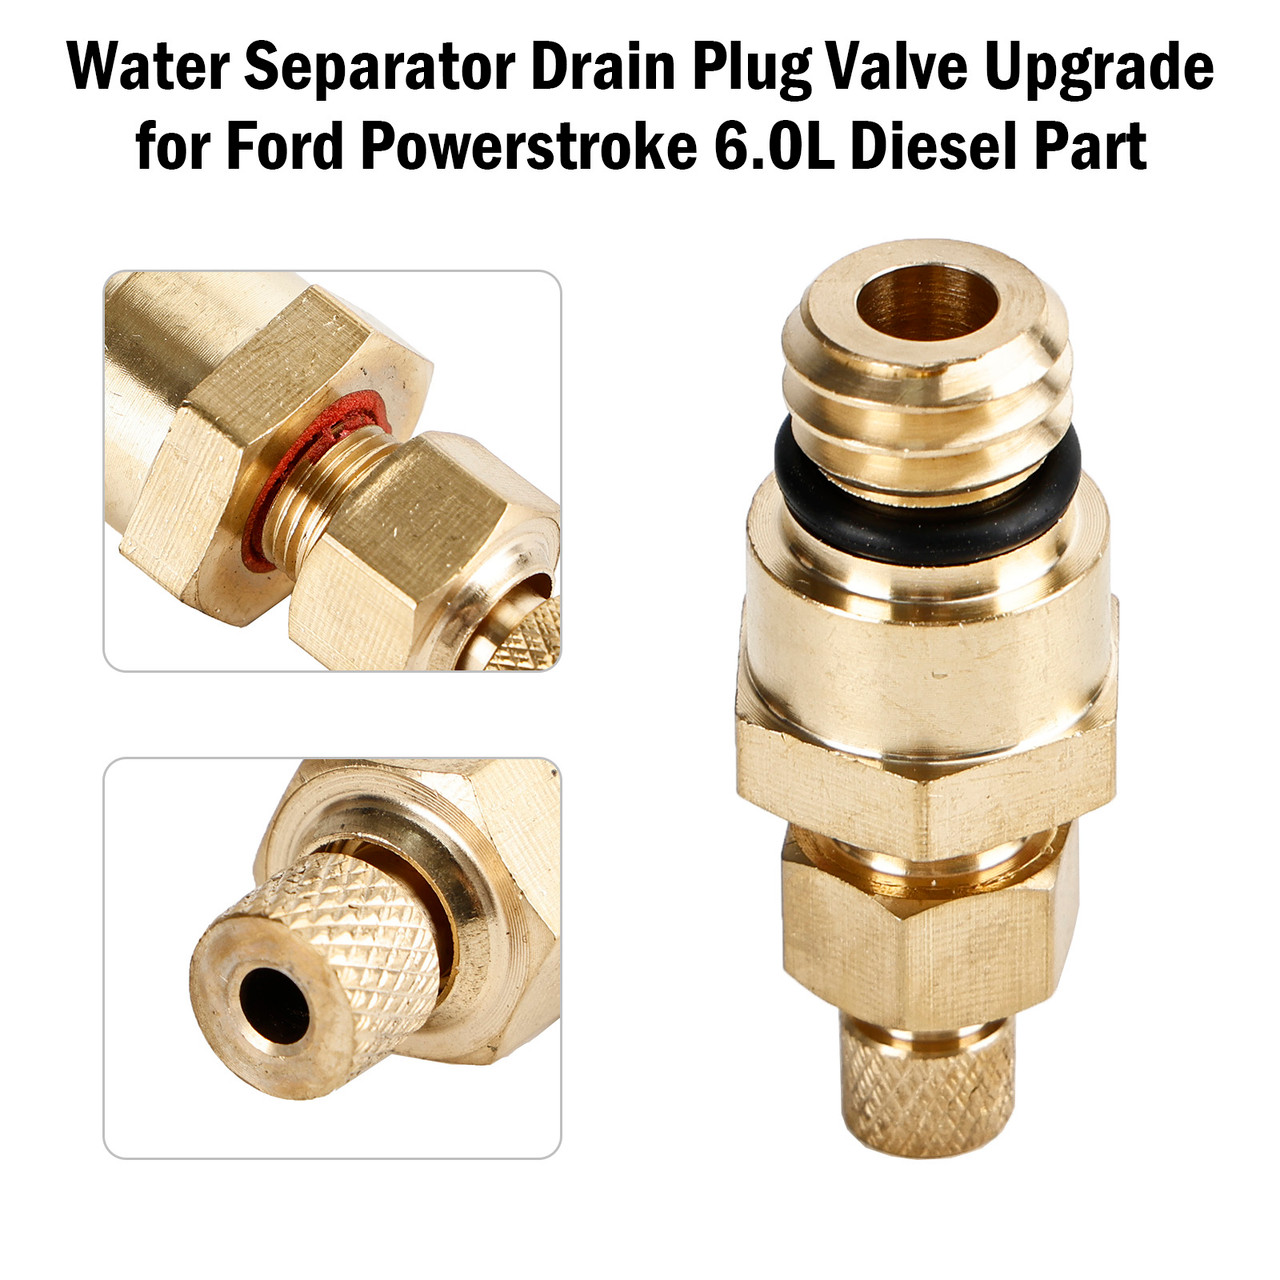 Water Separator Drain Plug Valve Upgrade for Ford Powerstroke 6.0L Diesel Part